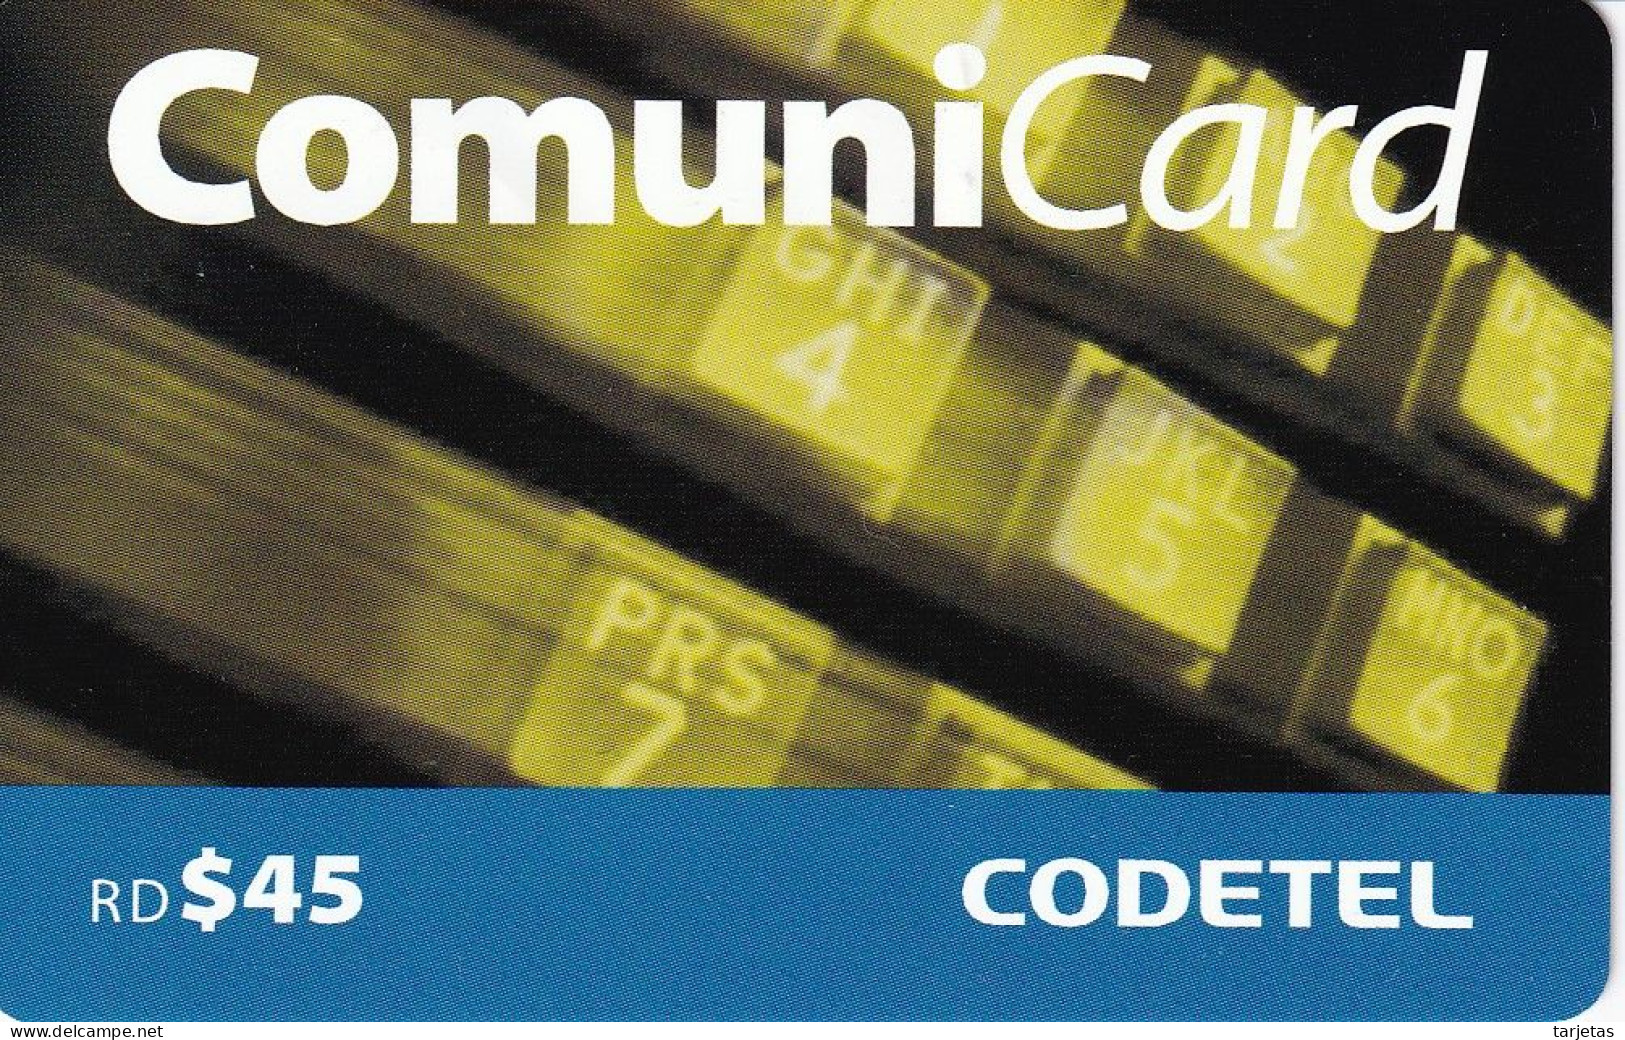 TARJETA DE REPUBLICA DOMINICANA DE COMUNICARD DE CODETEL $45 (NUMERACION CONTROL ABAJO) - Dominicana